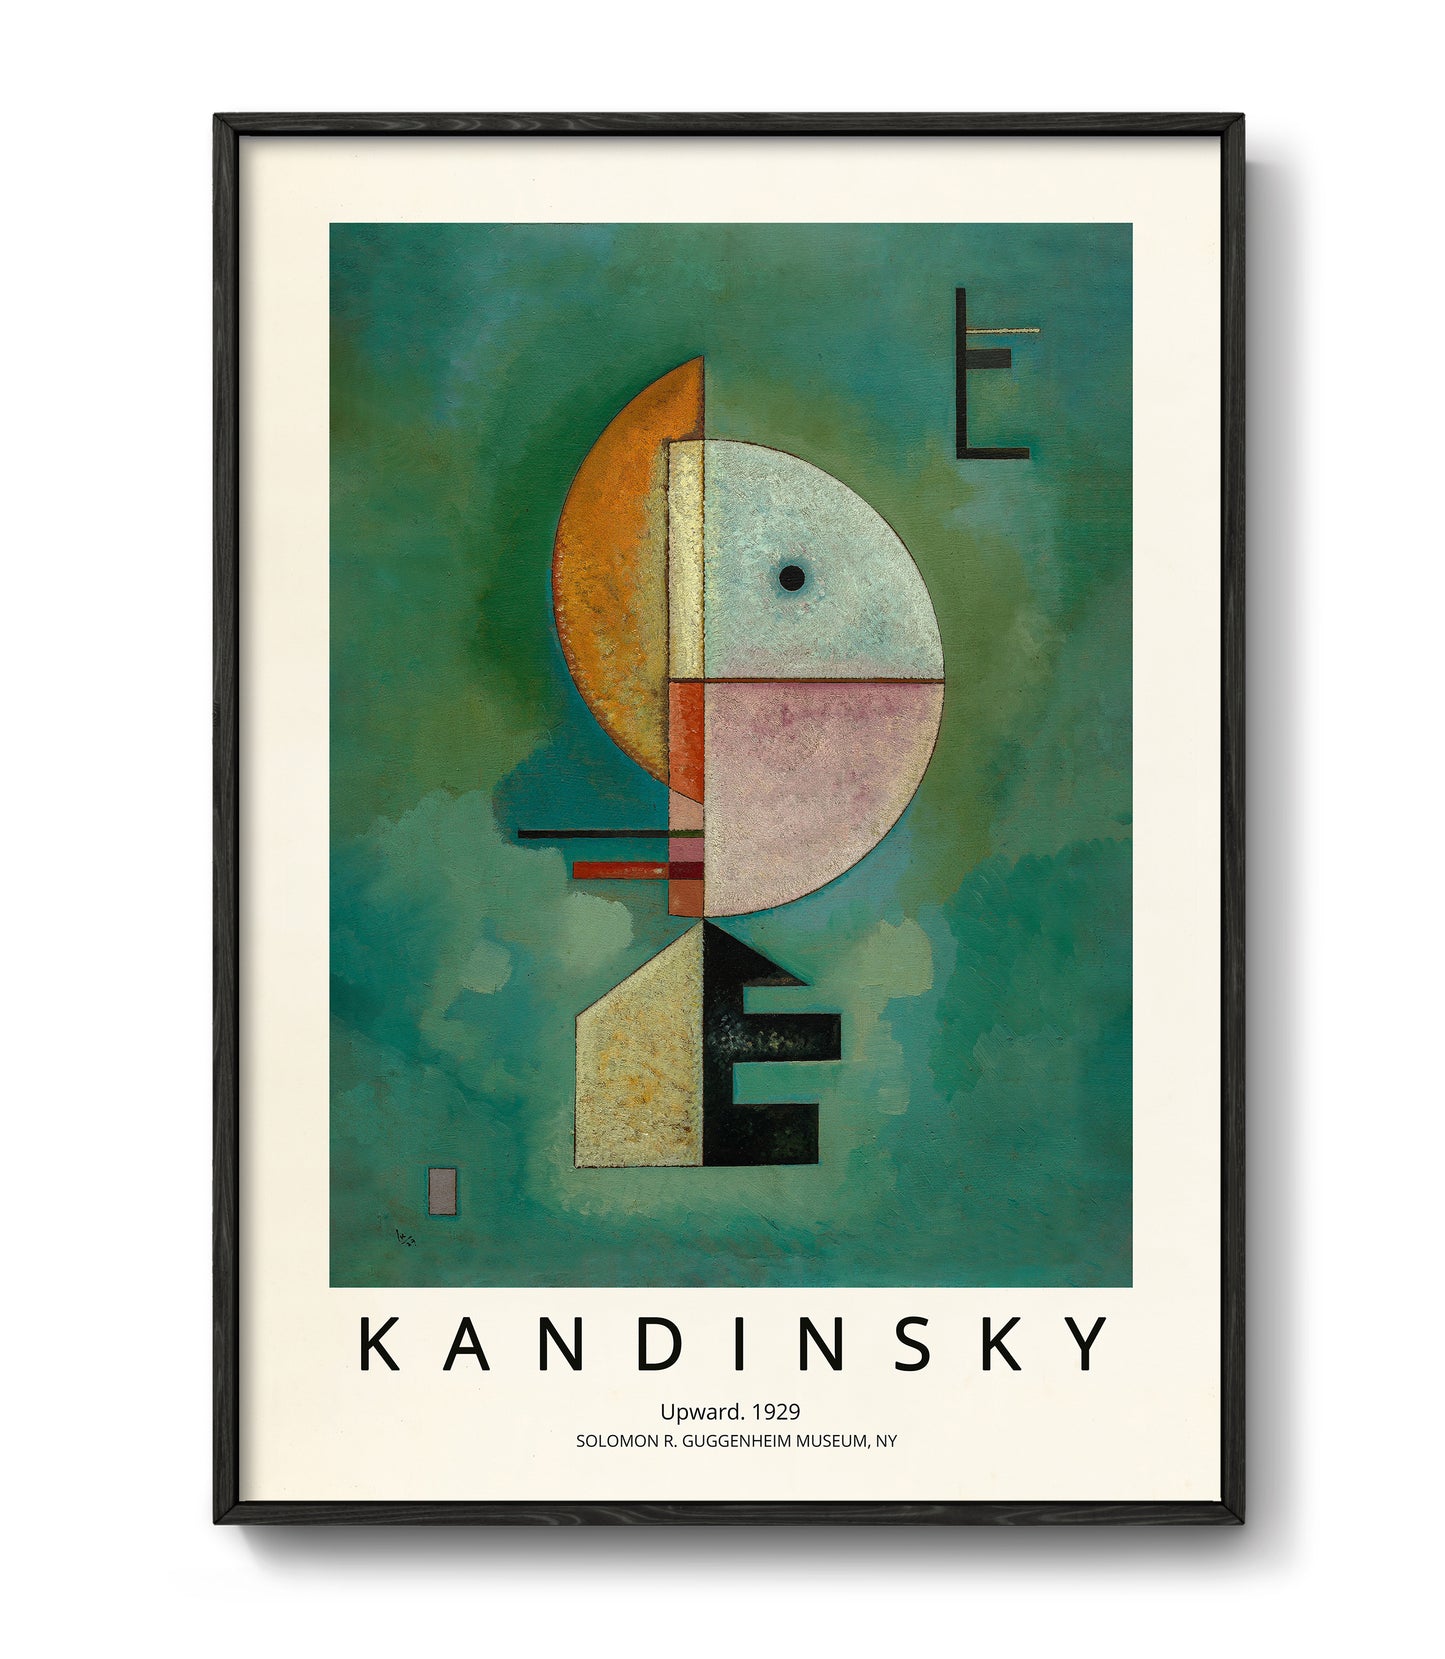 Upward by Kandinsky